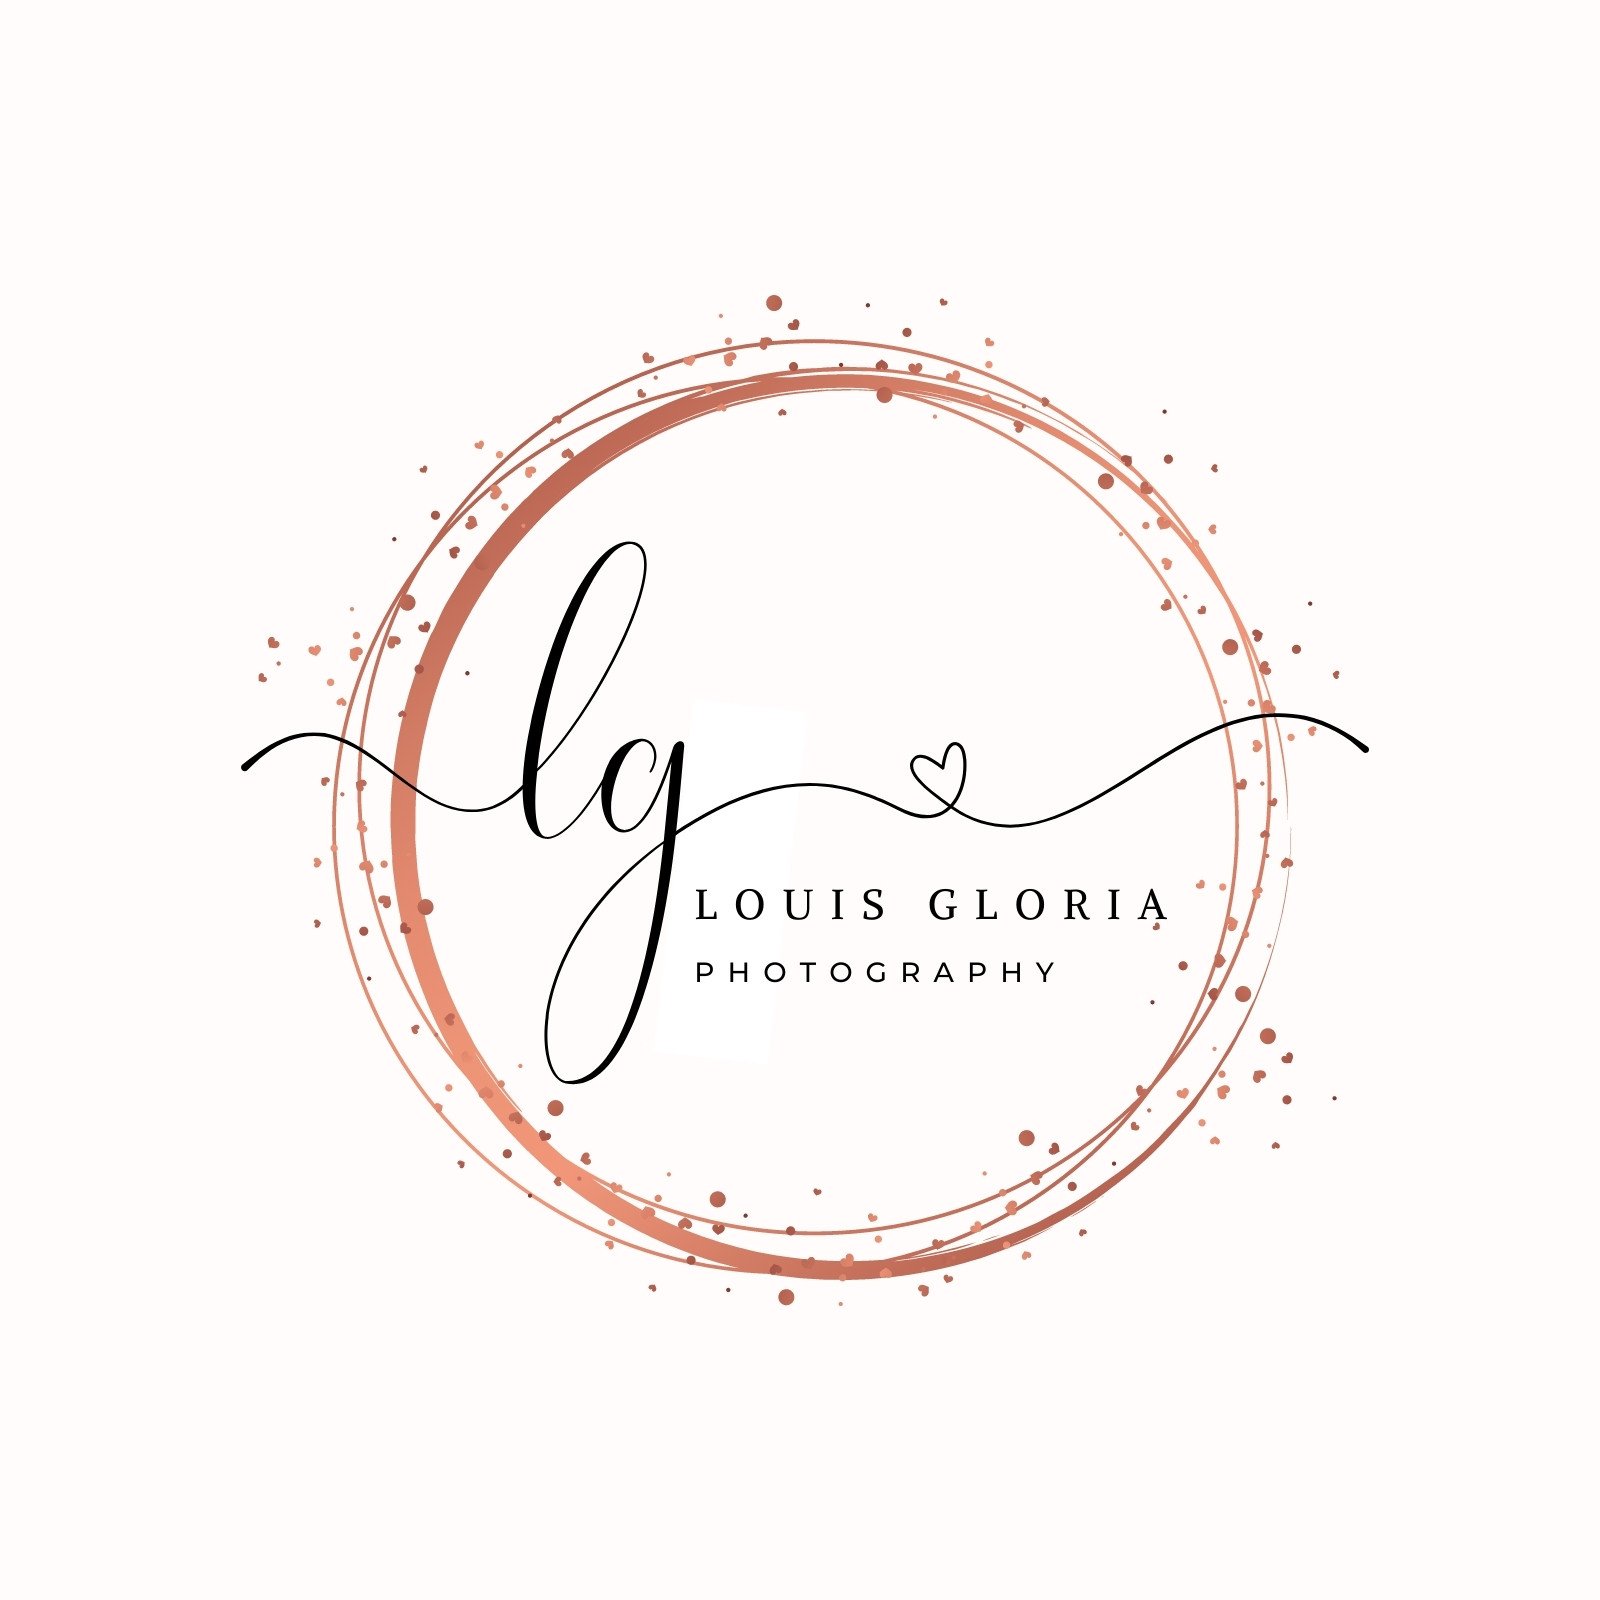 Trupti Pomaje on LinkedIn: Created a logo for Aditya Landekar photography.  #logodesign…